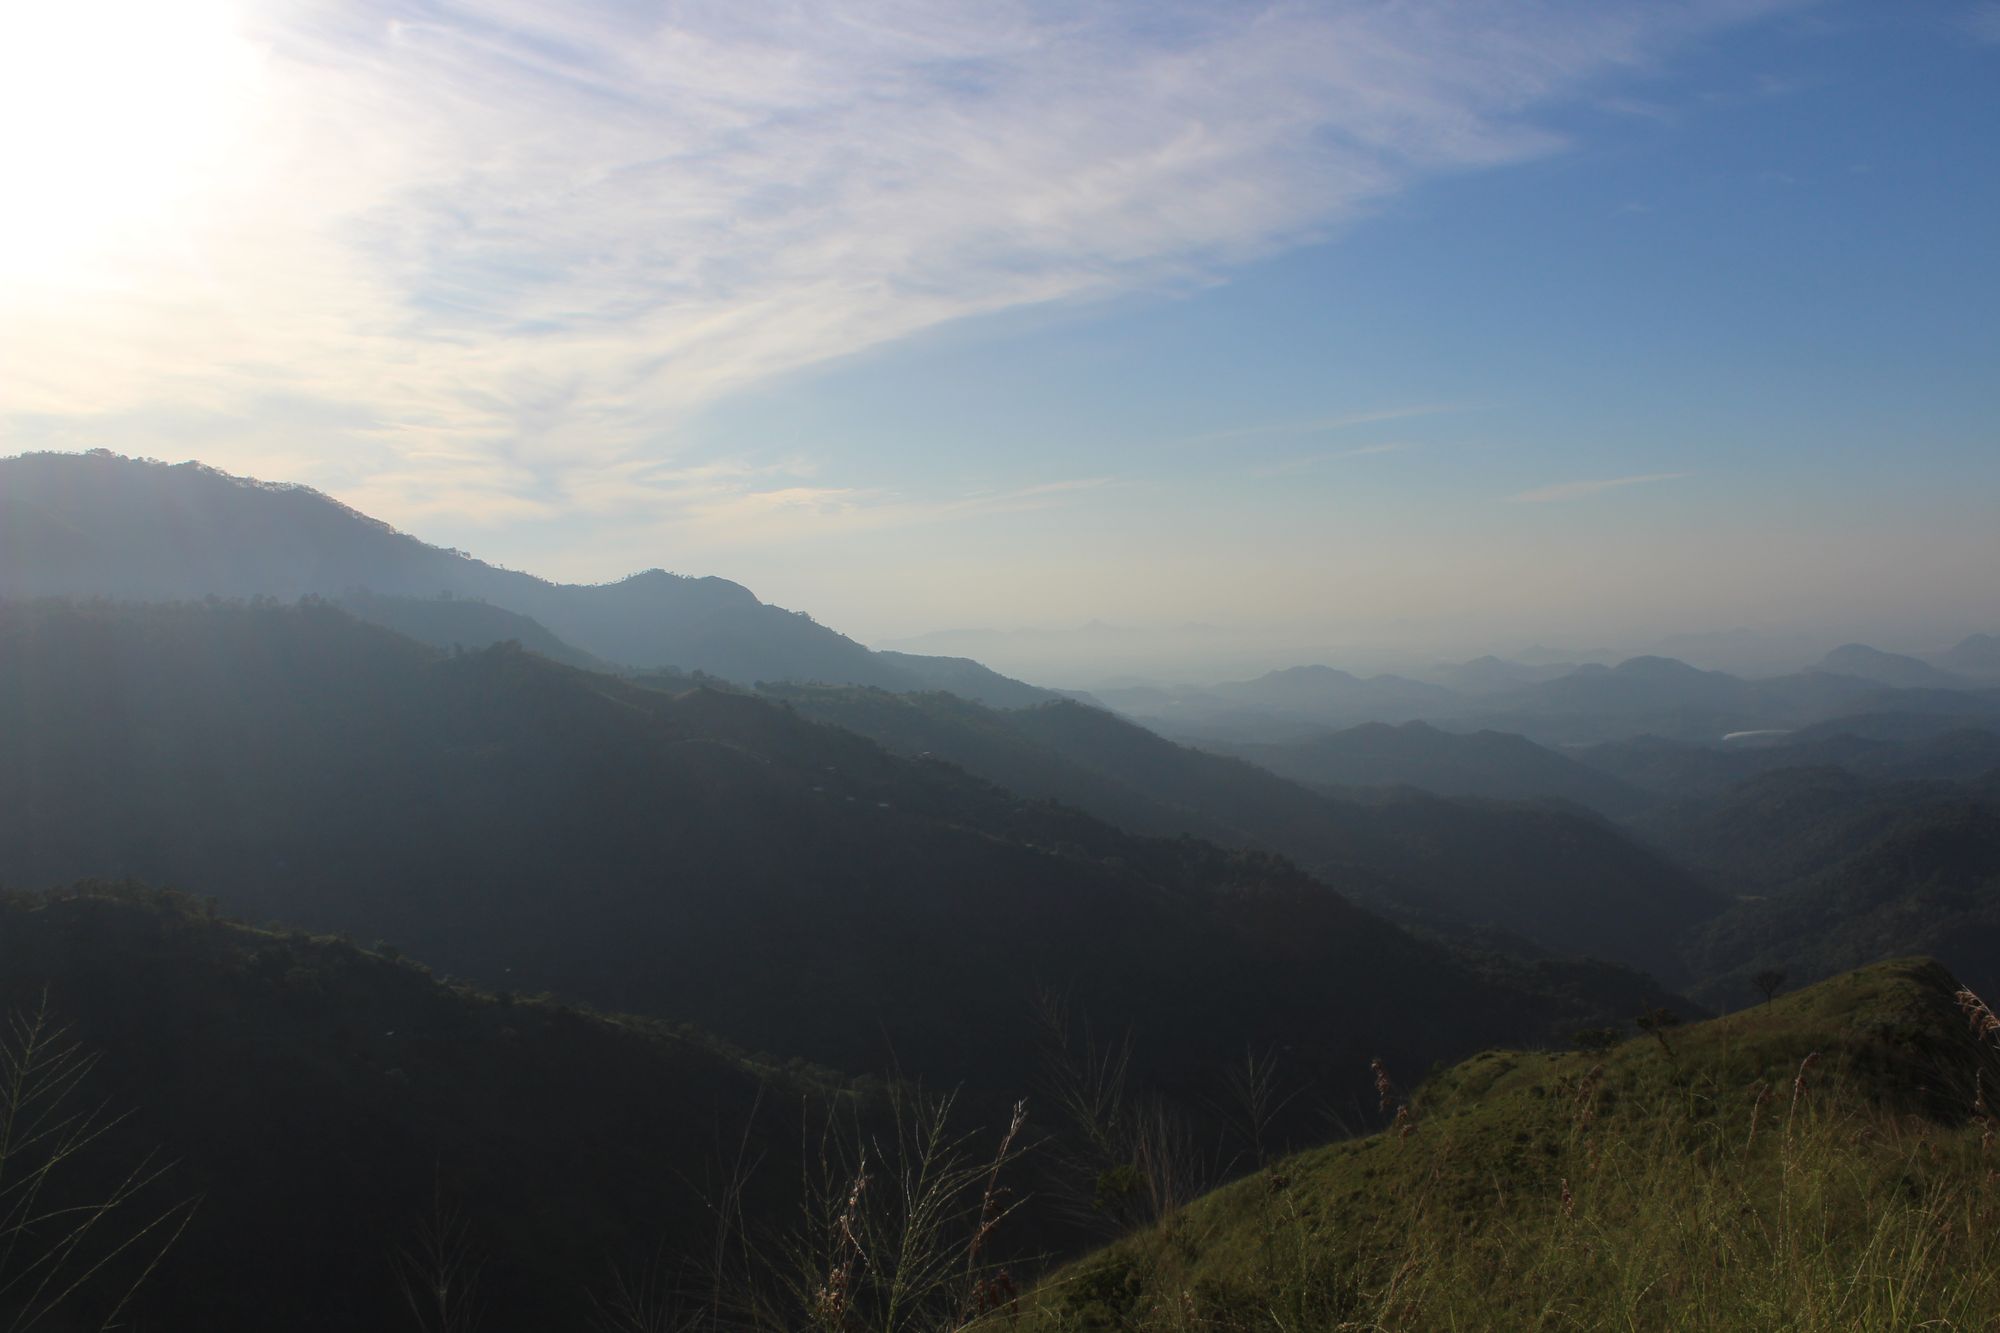 The central highlands as seen from Little Adam's Peak in Ella, Sri Lanka